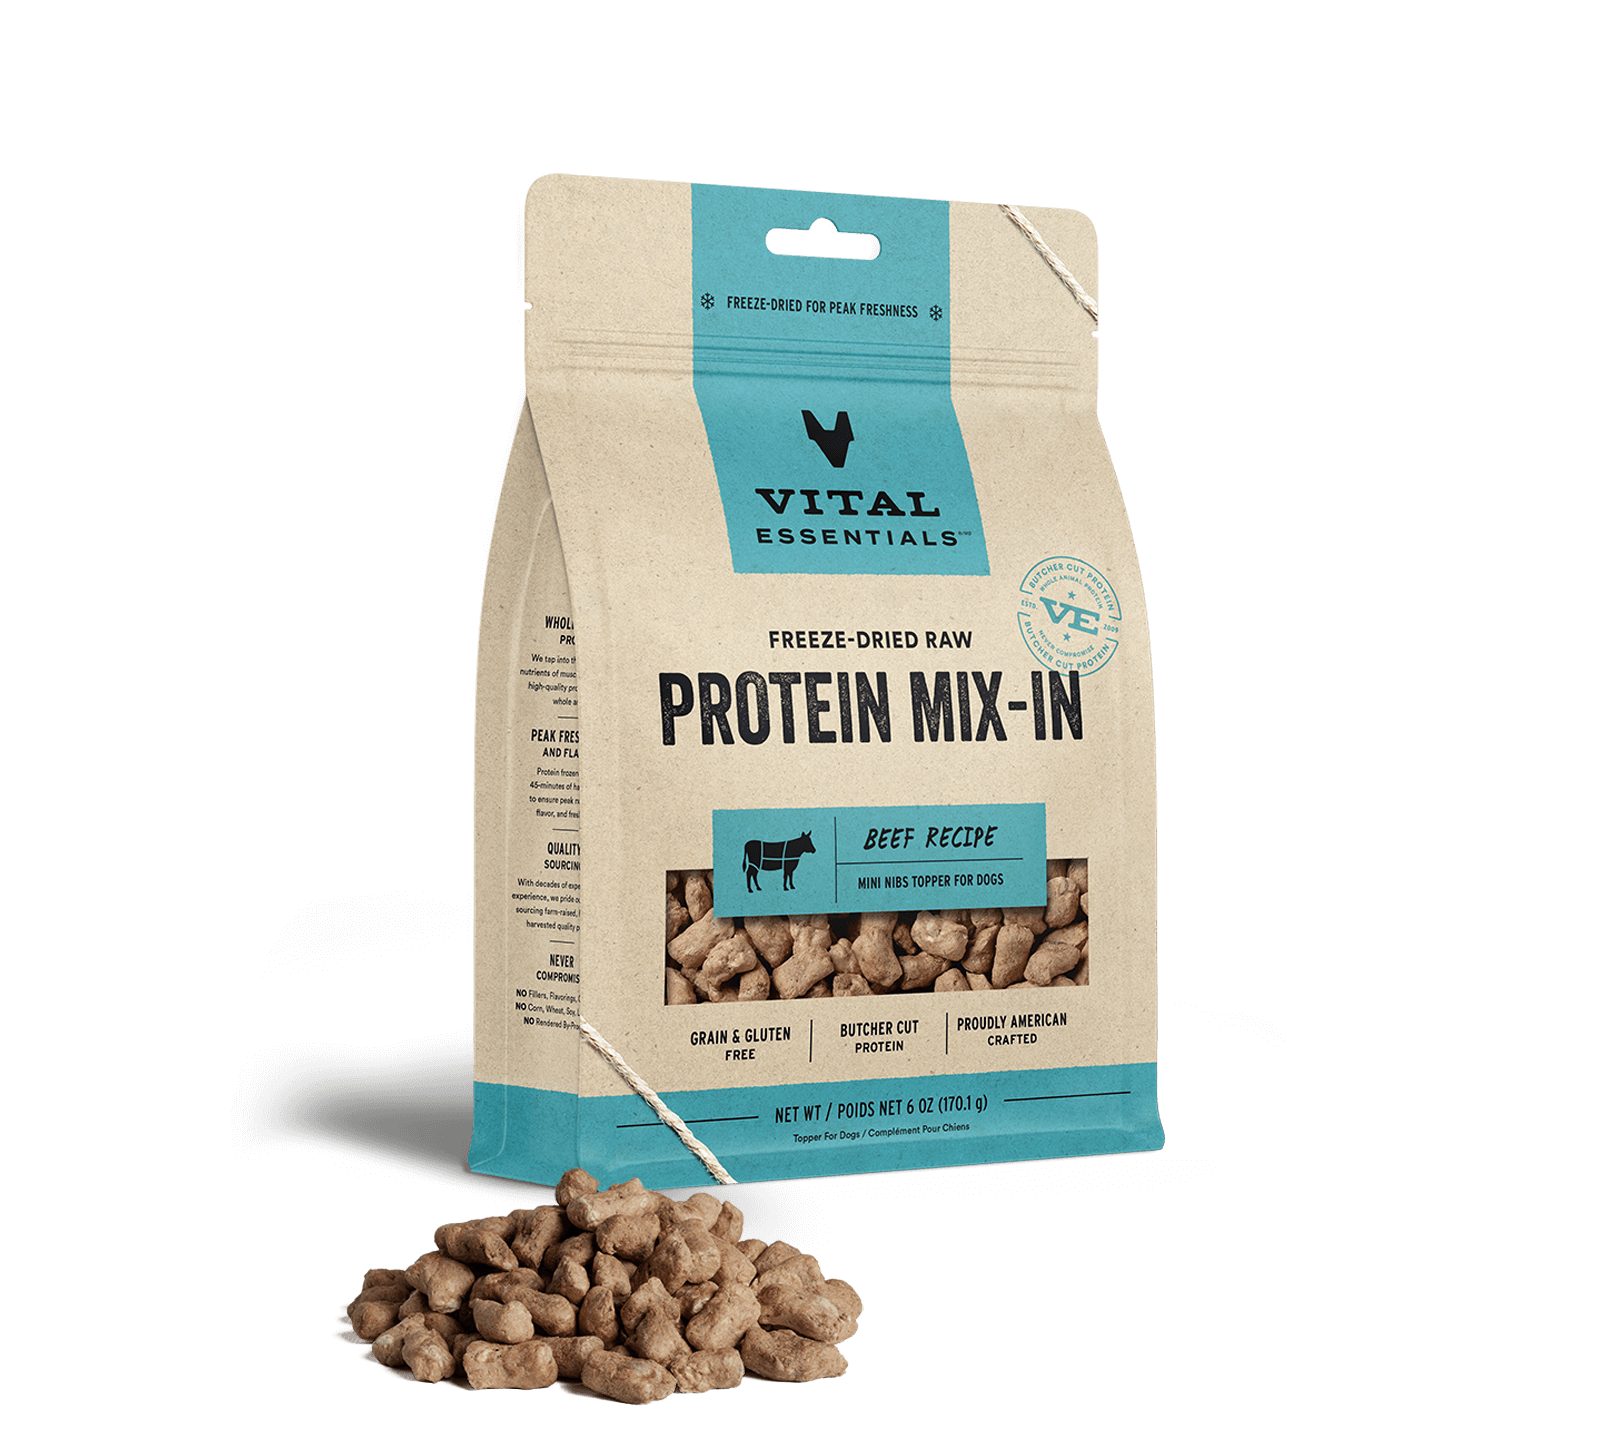 Vital Essentials Freeze-Dried Raw Protein Mix-In Beef Recipe Mini Nibs Topper for Dogs, 6 oz - Treats